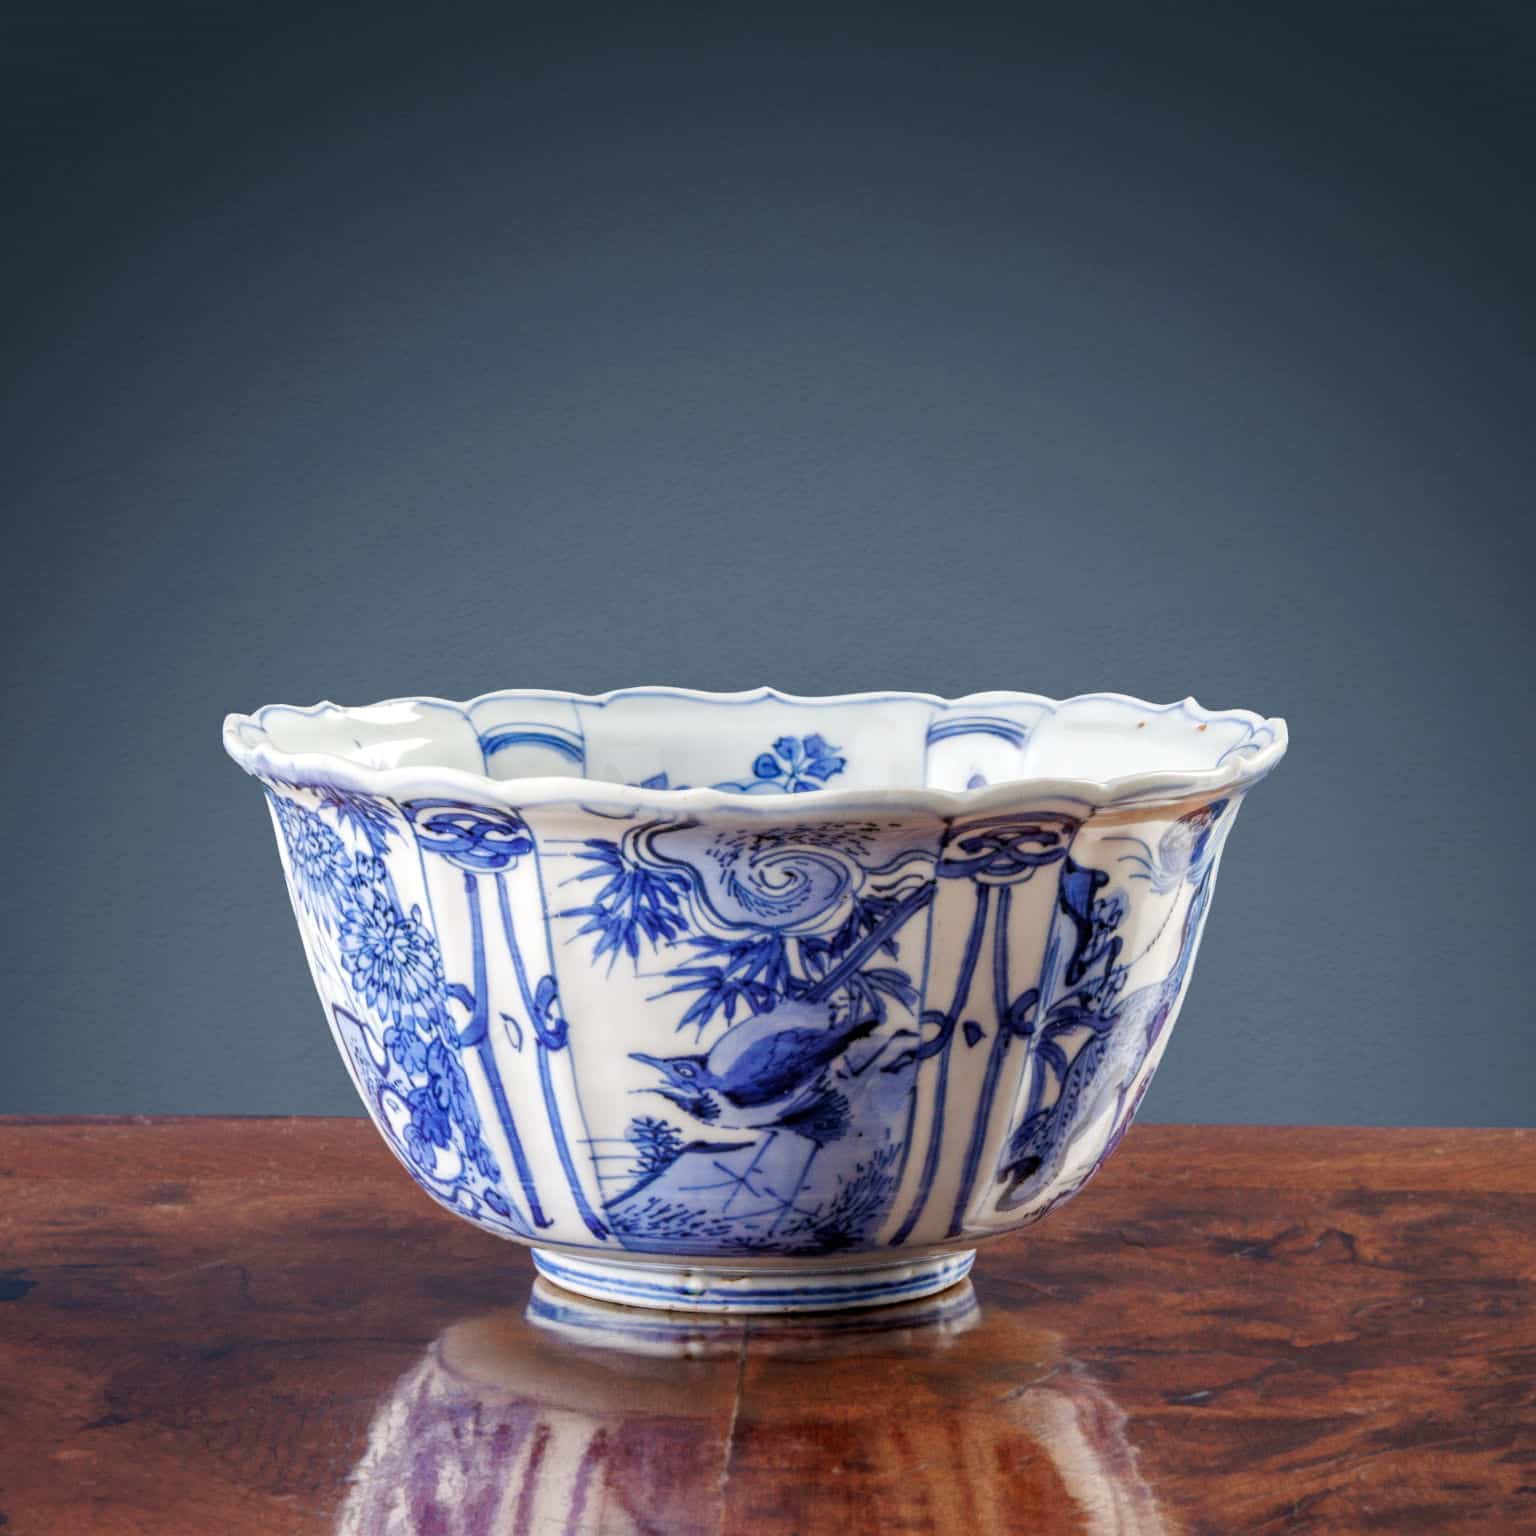 Ciotola in porcellana di Kraak, Cina epoca Ming, periodo Wanli (1573 -1619)